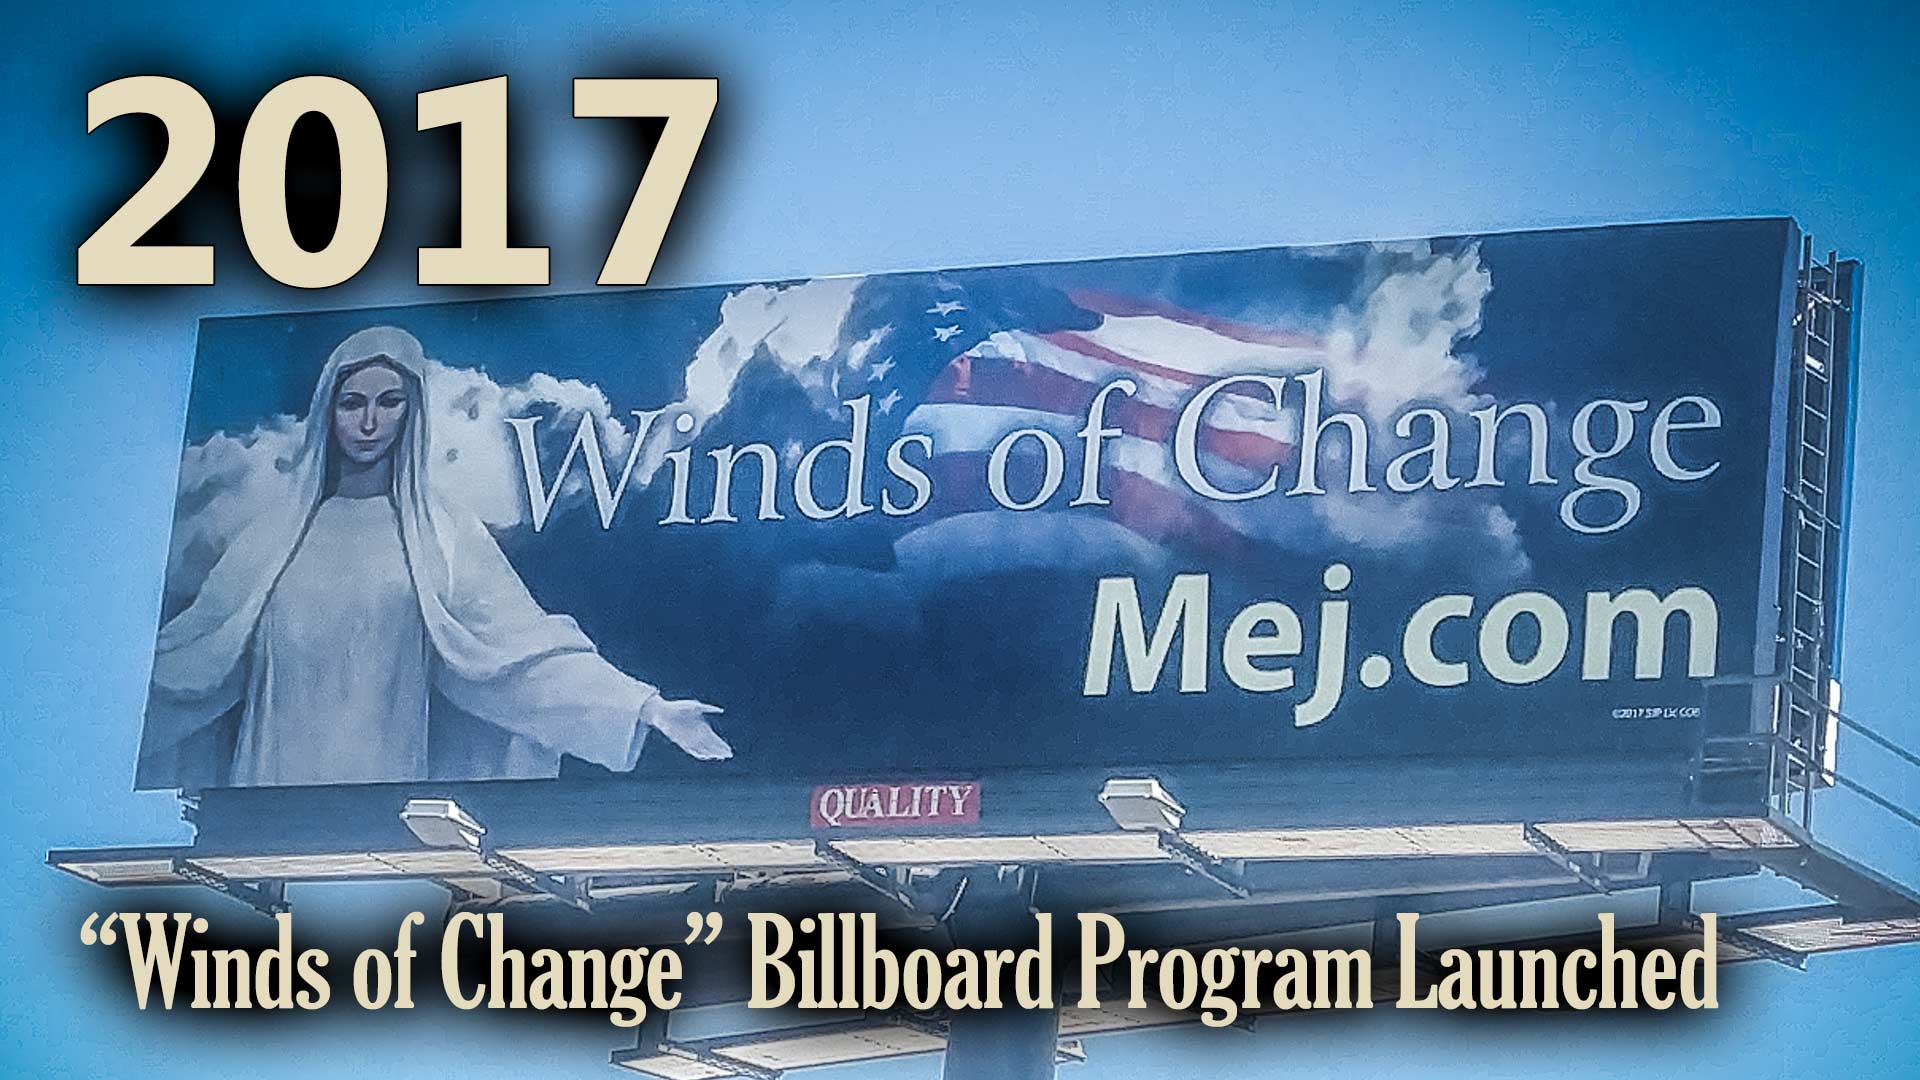 Winds of Change Billboards